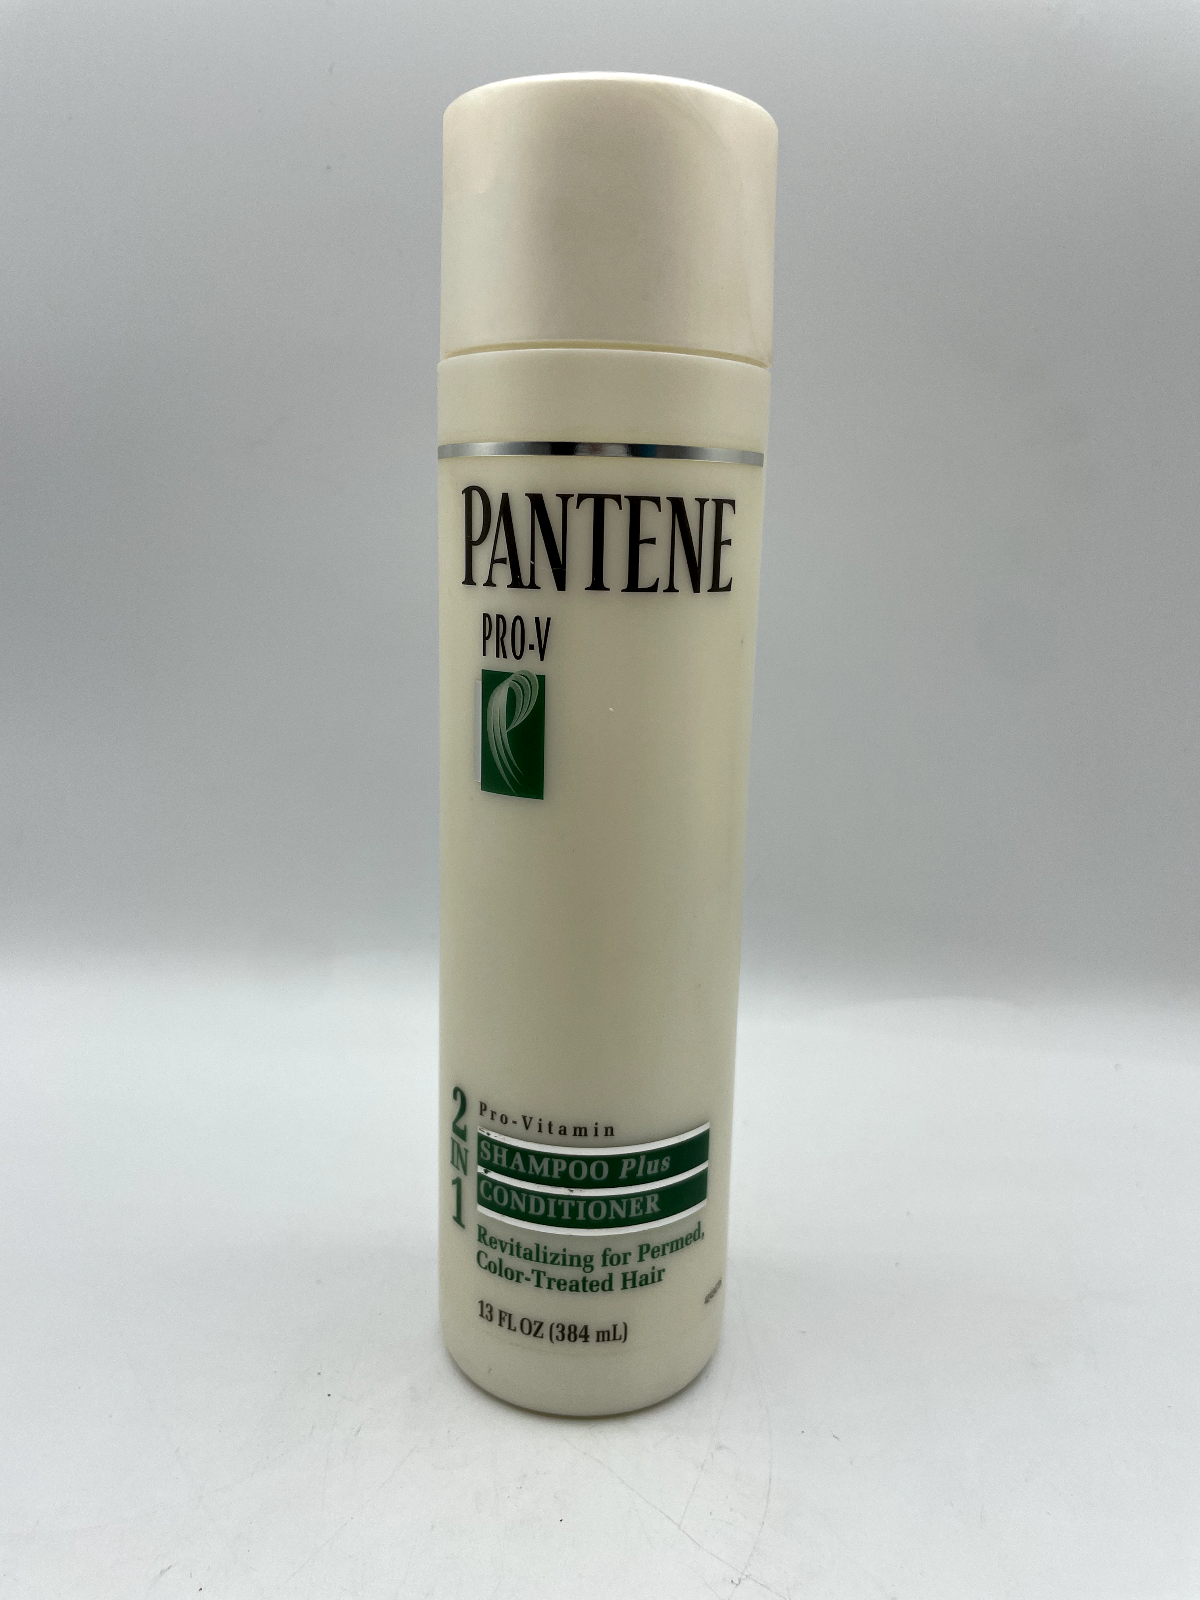 Pantene Pro-v 2 IN 1 Shampoo + Conditioner Vitamin Permed Color Hair VTG NOS - $11.29